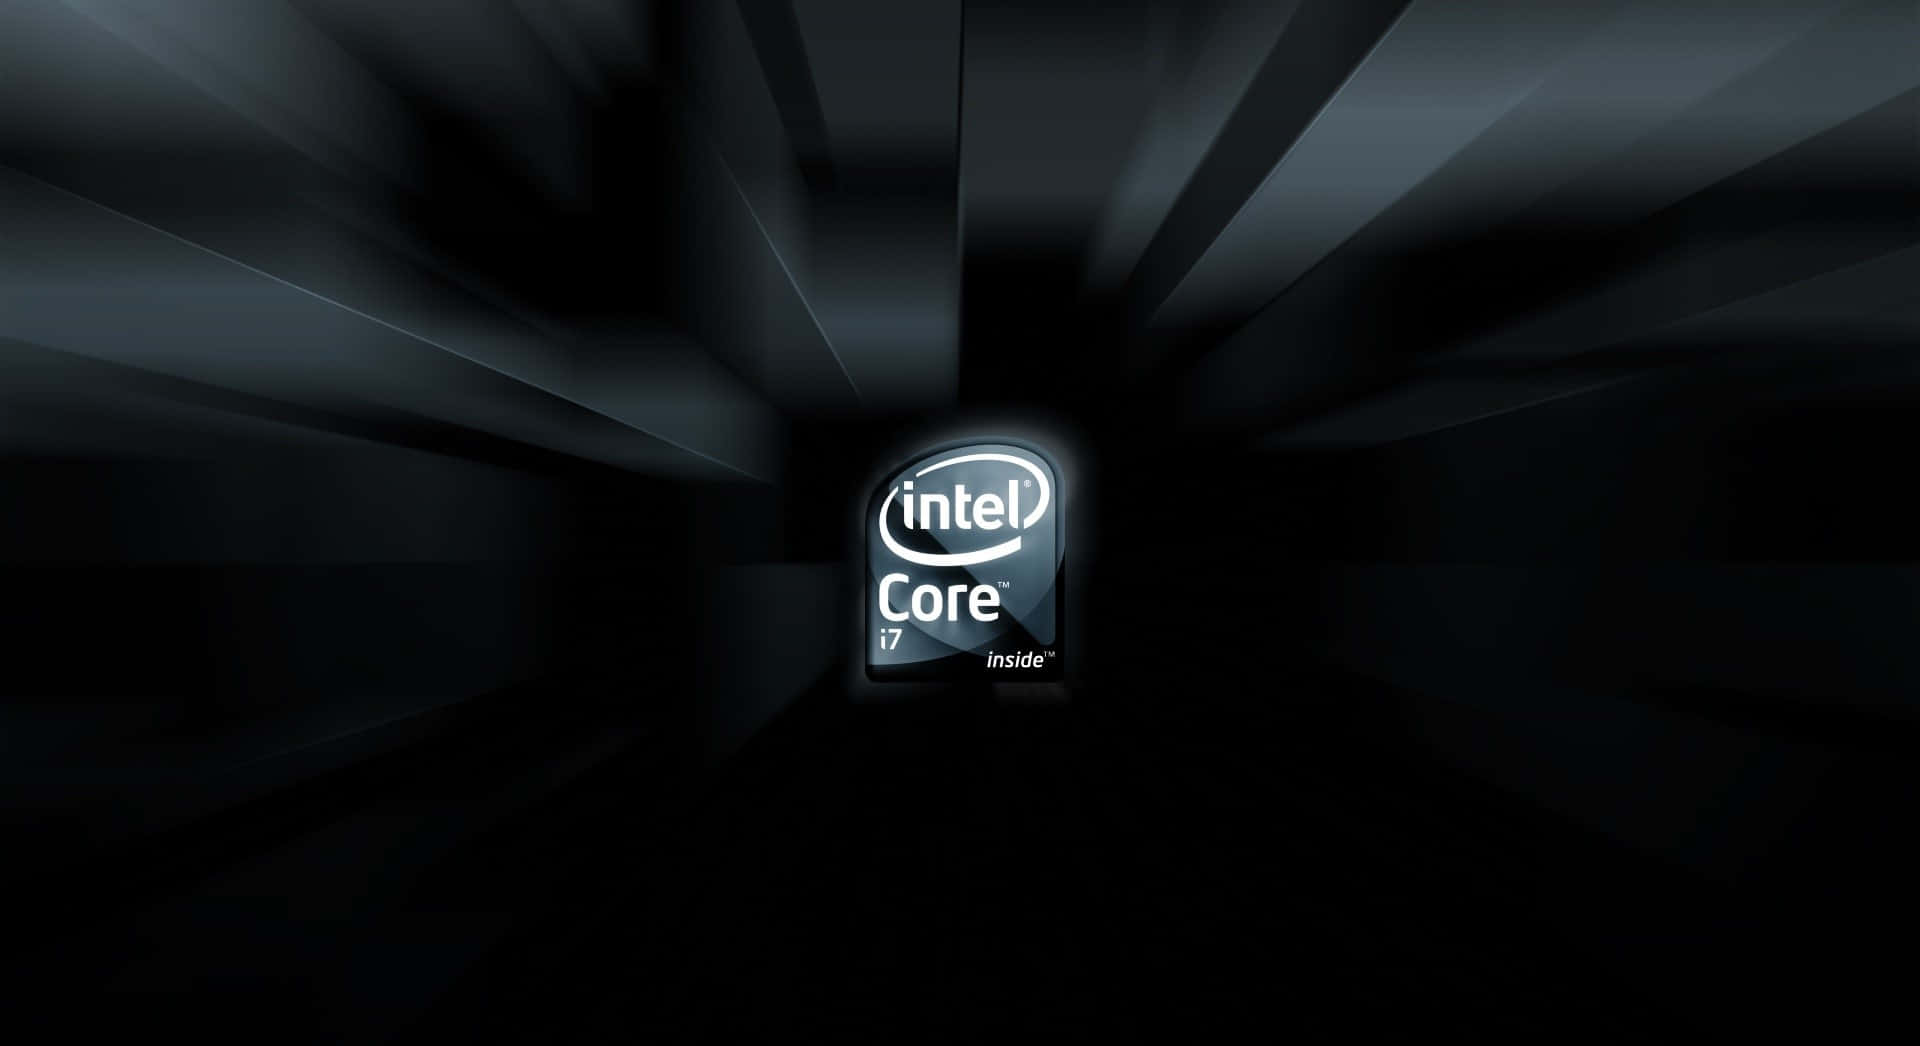 Intel Corei7 Processor Abstract Design Wallpaper